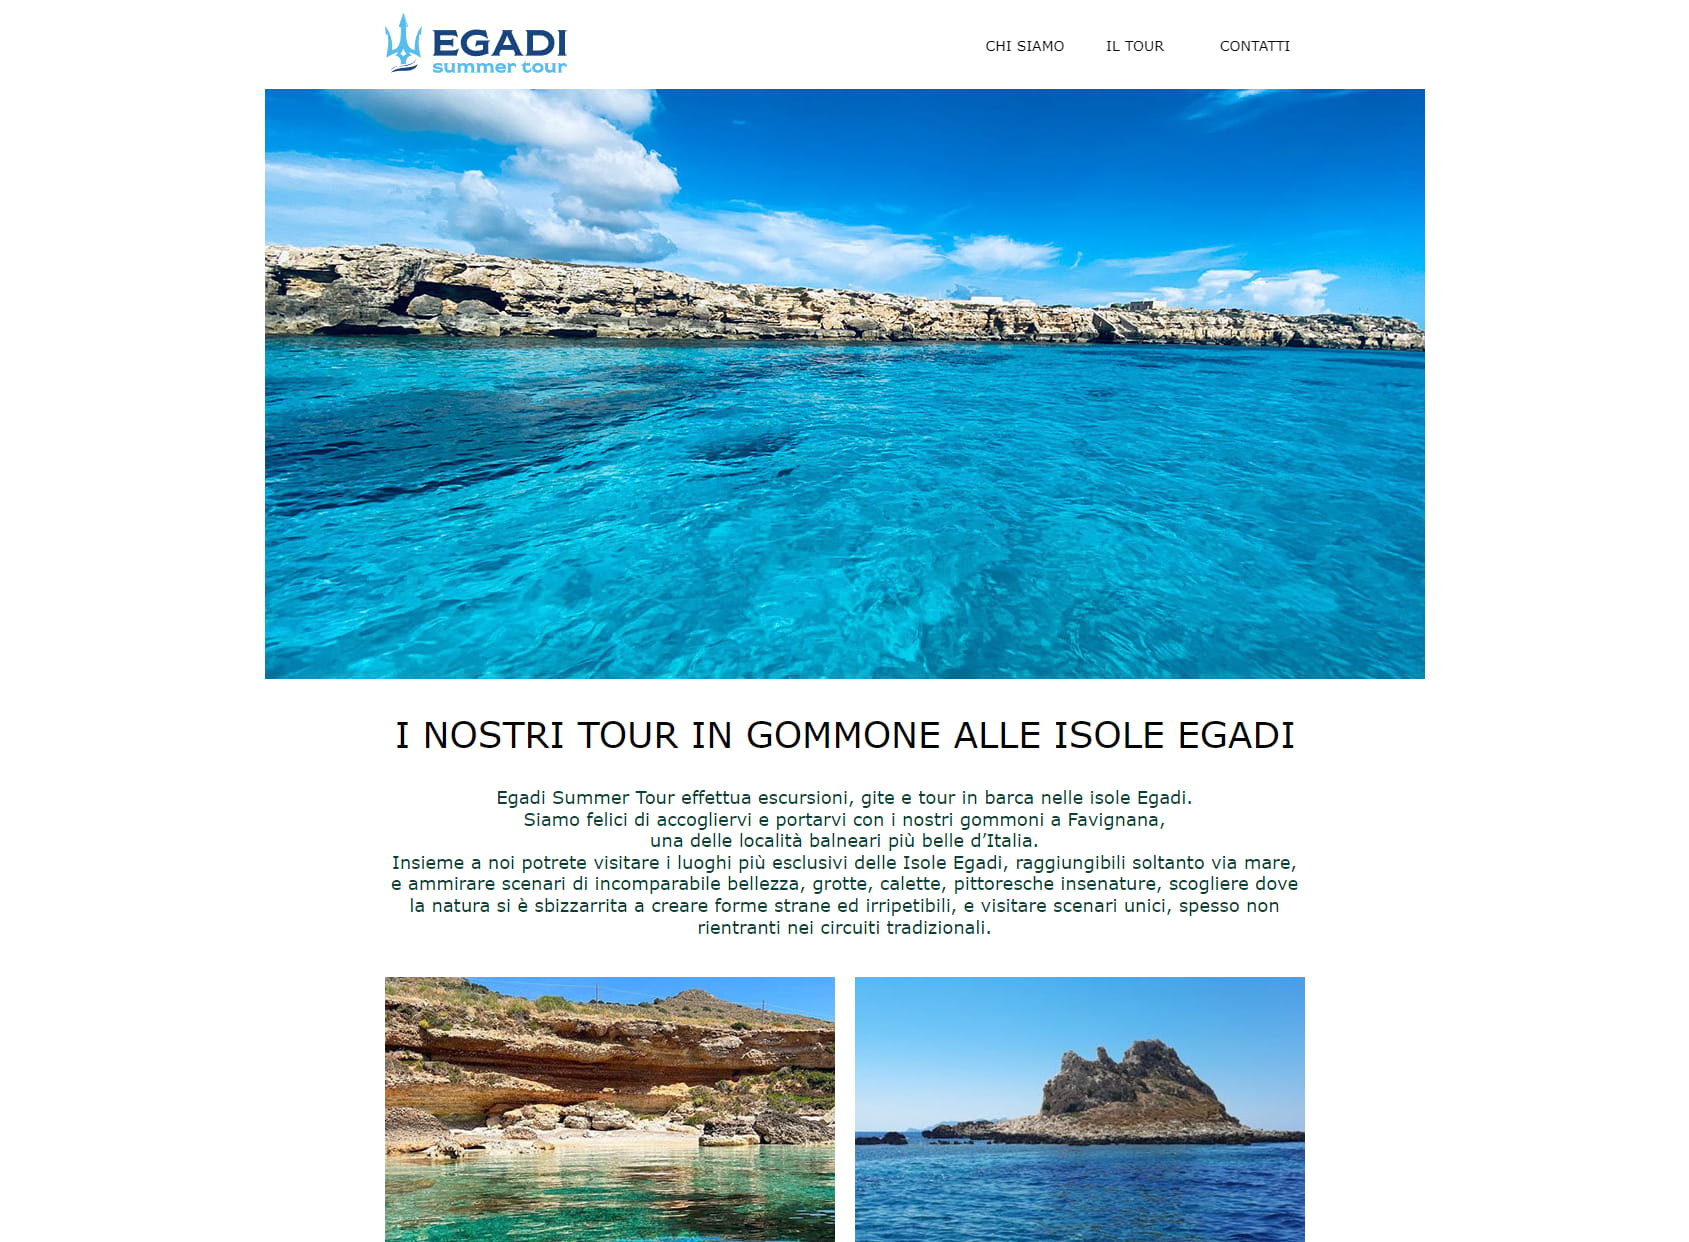 Egadi Summer Tour - Gite in gommone alle isole Egadi